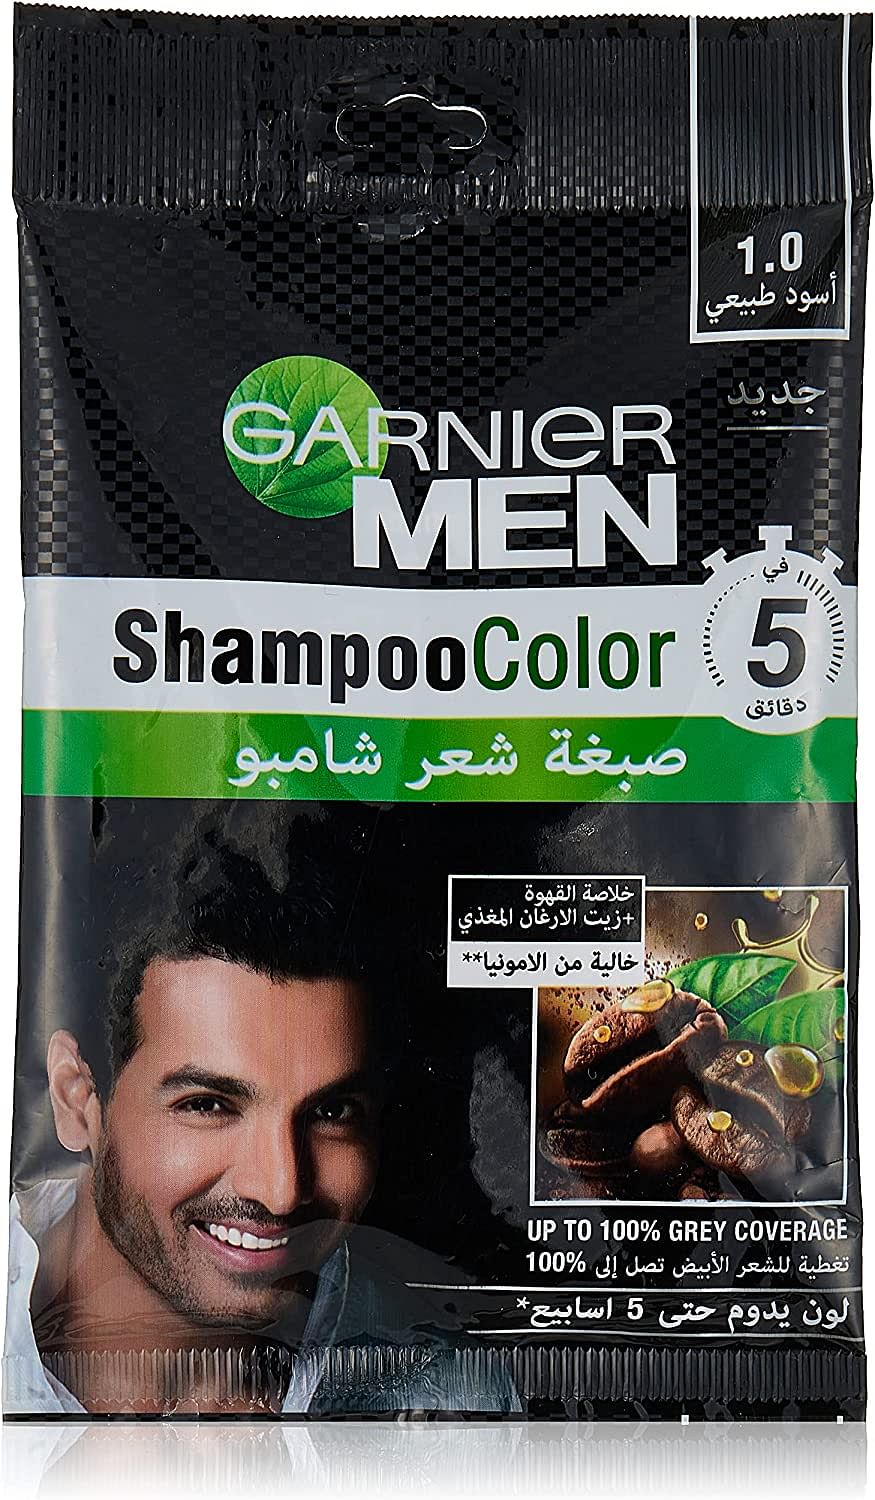 Garnier Men Shampoo Color 1.0 Natural Black